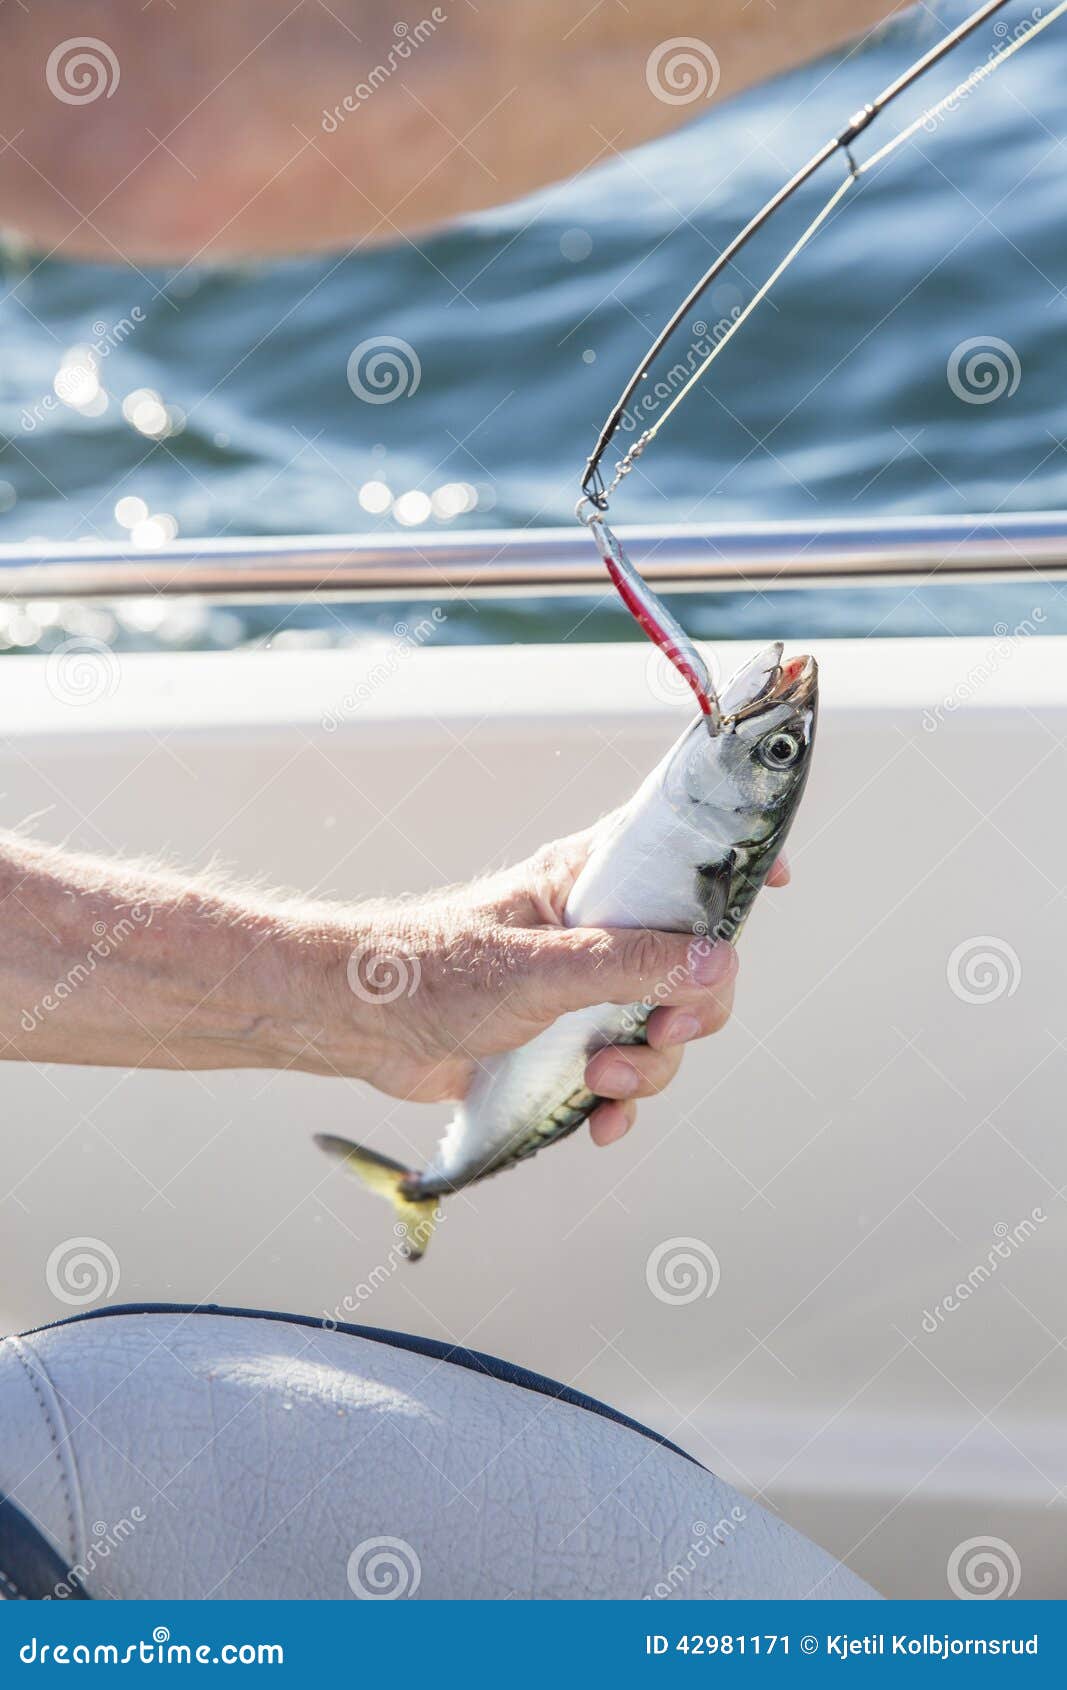 Man Fishing Mackerel from Boat at Sea Stock Image - Image of fresh, people:  42981171